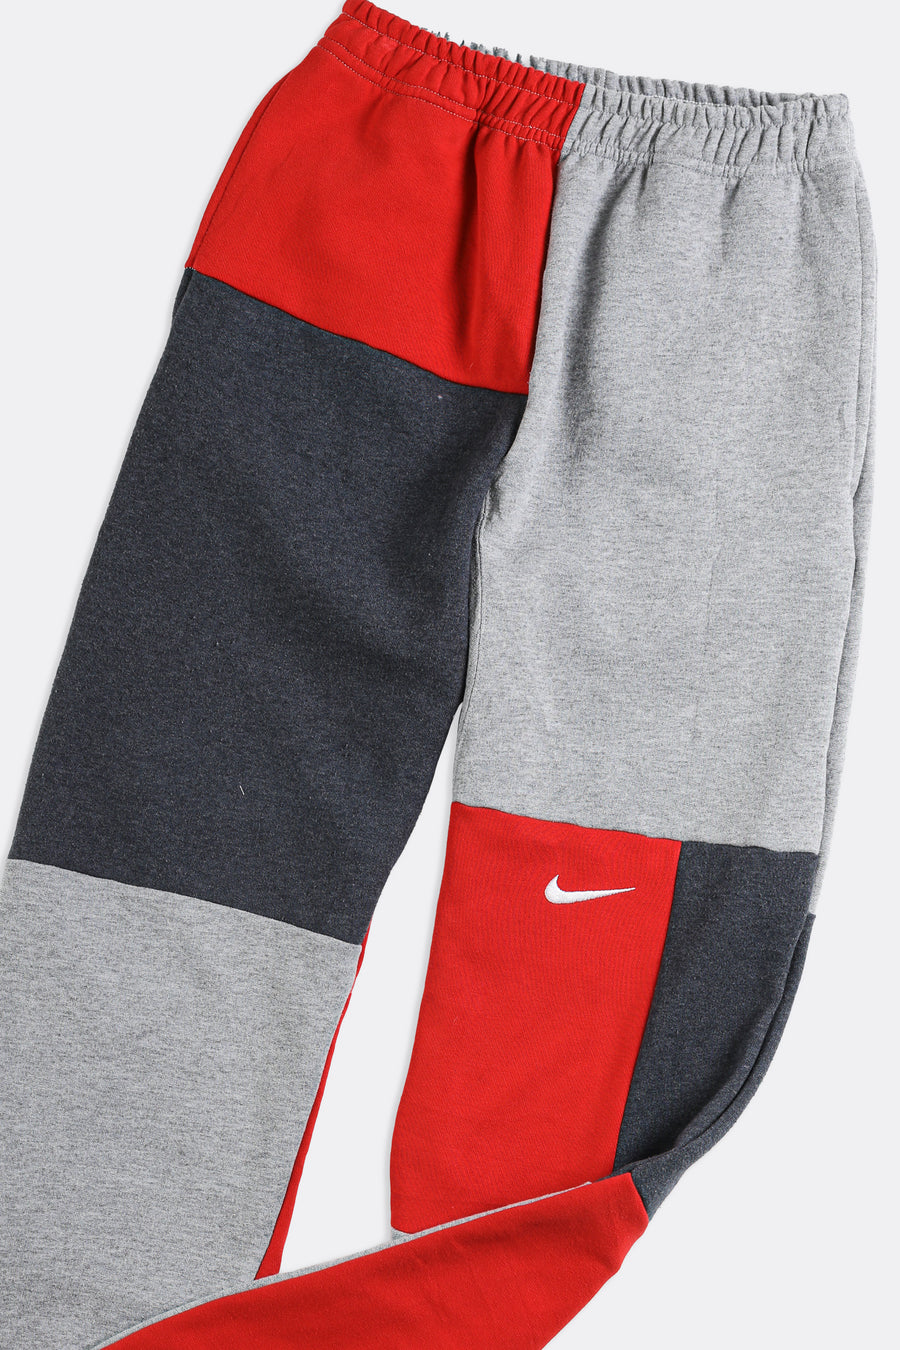 Unisex Rework Patchwork Nike Sweatpants - Women-XS, Men-XXS